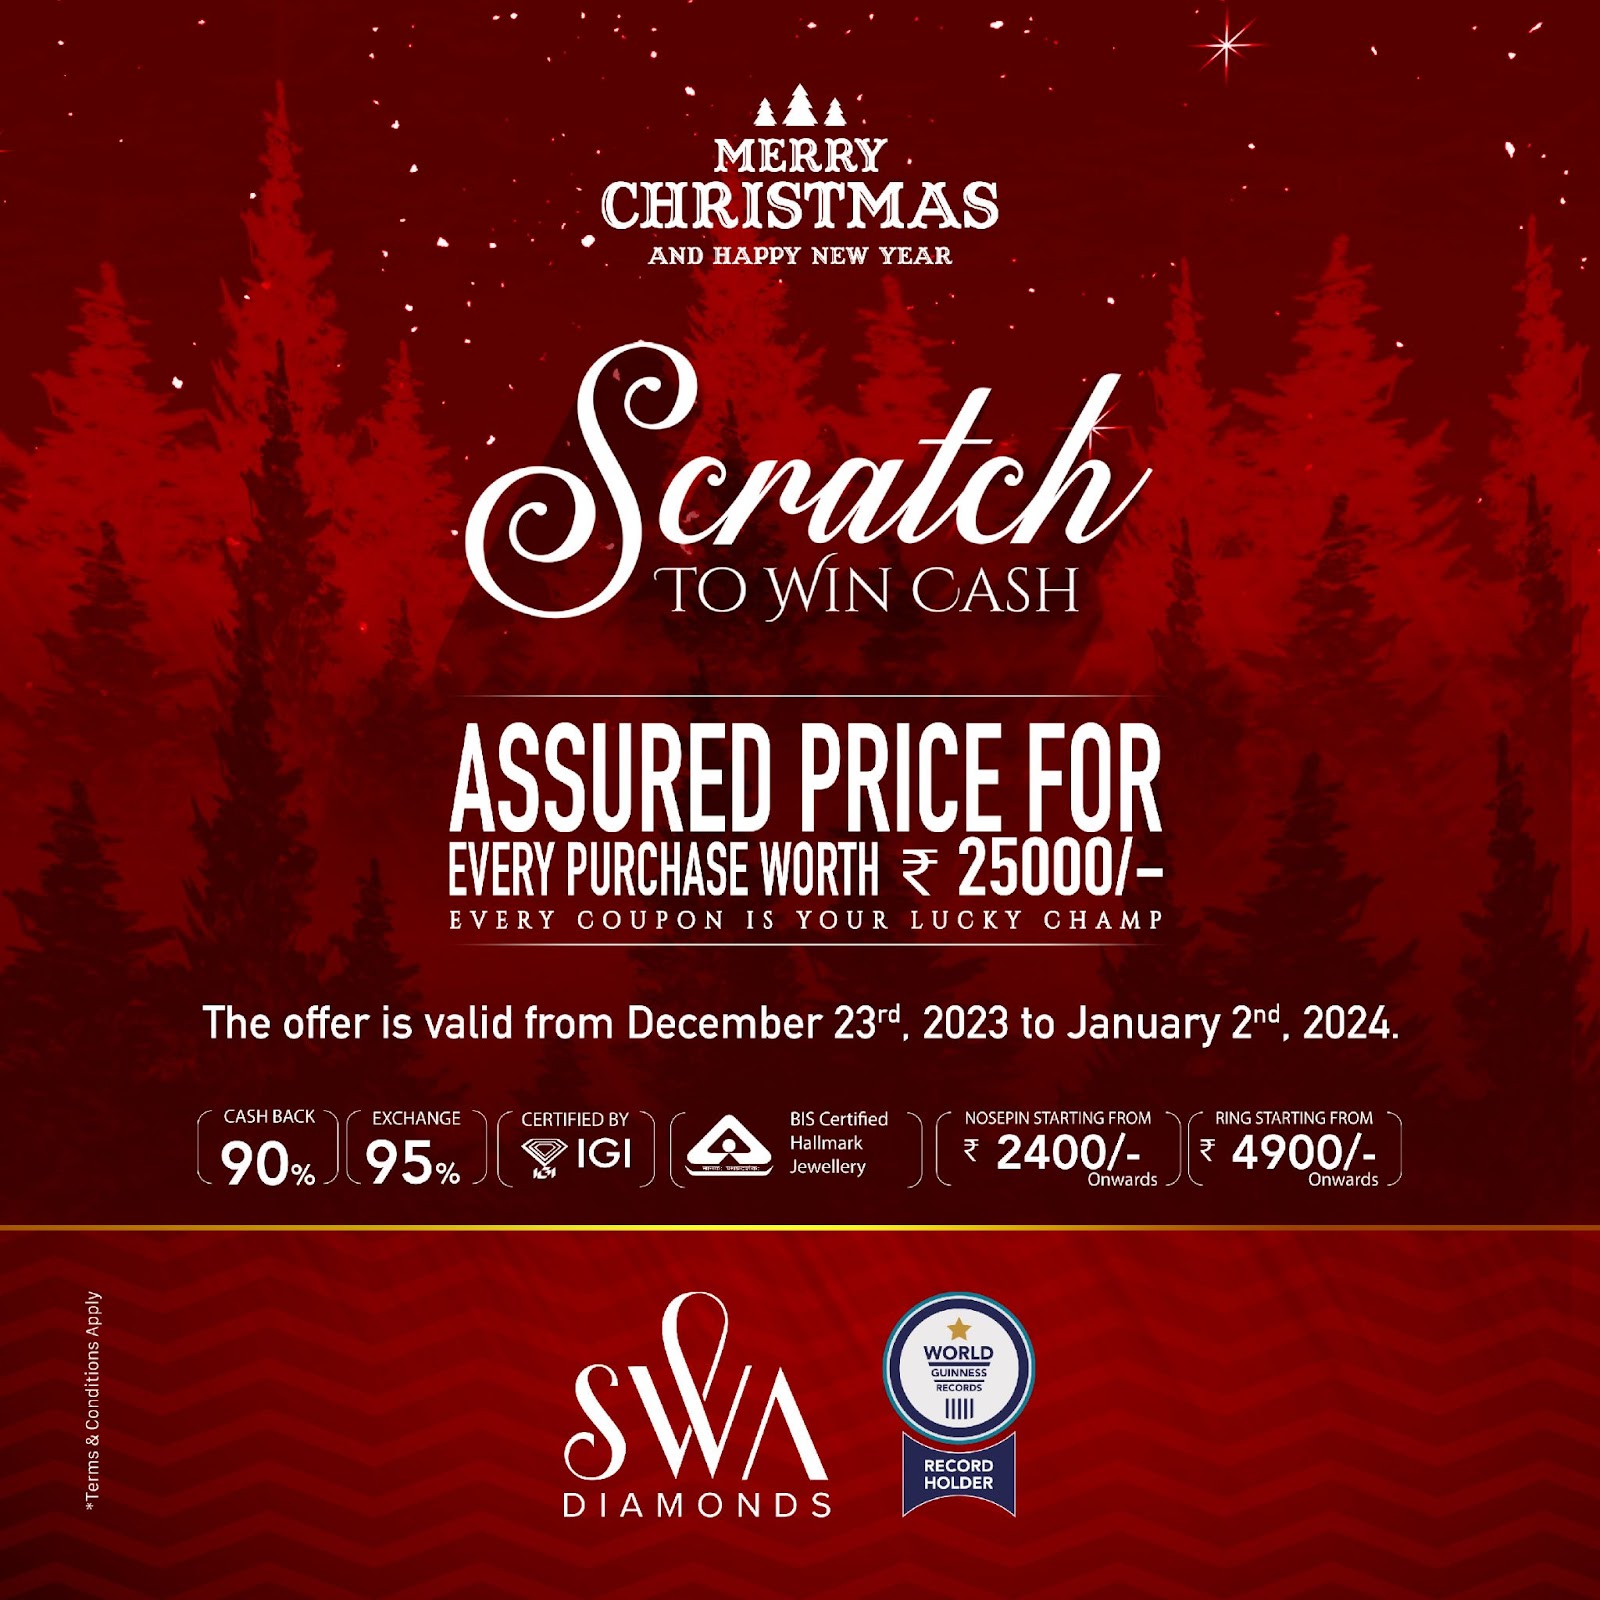 swadiamonds_christmas offers